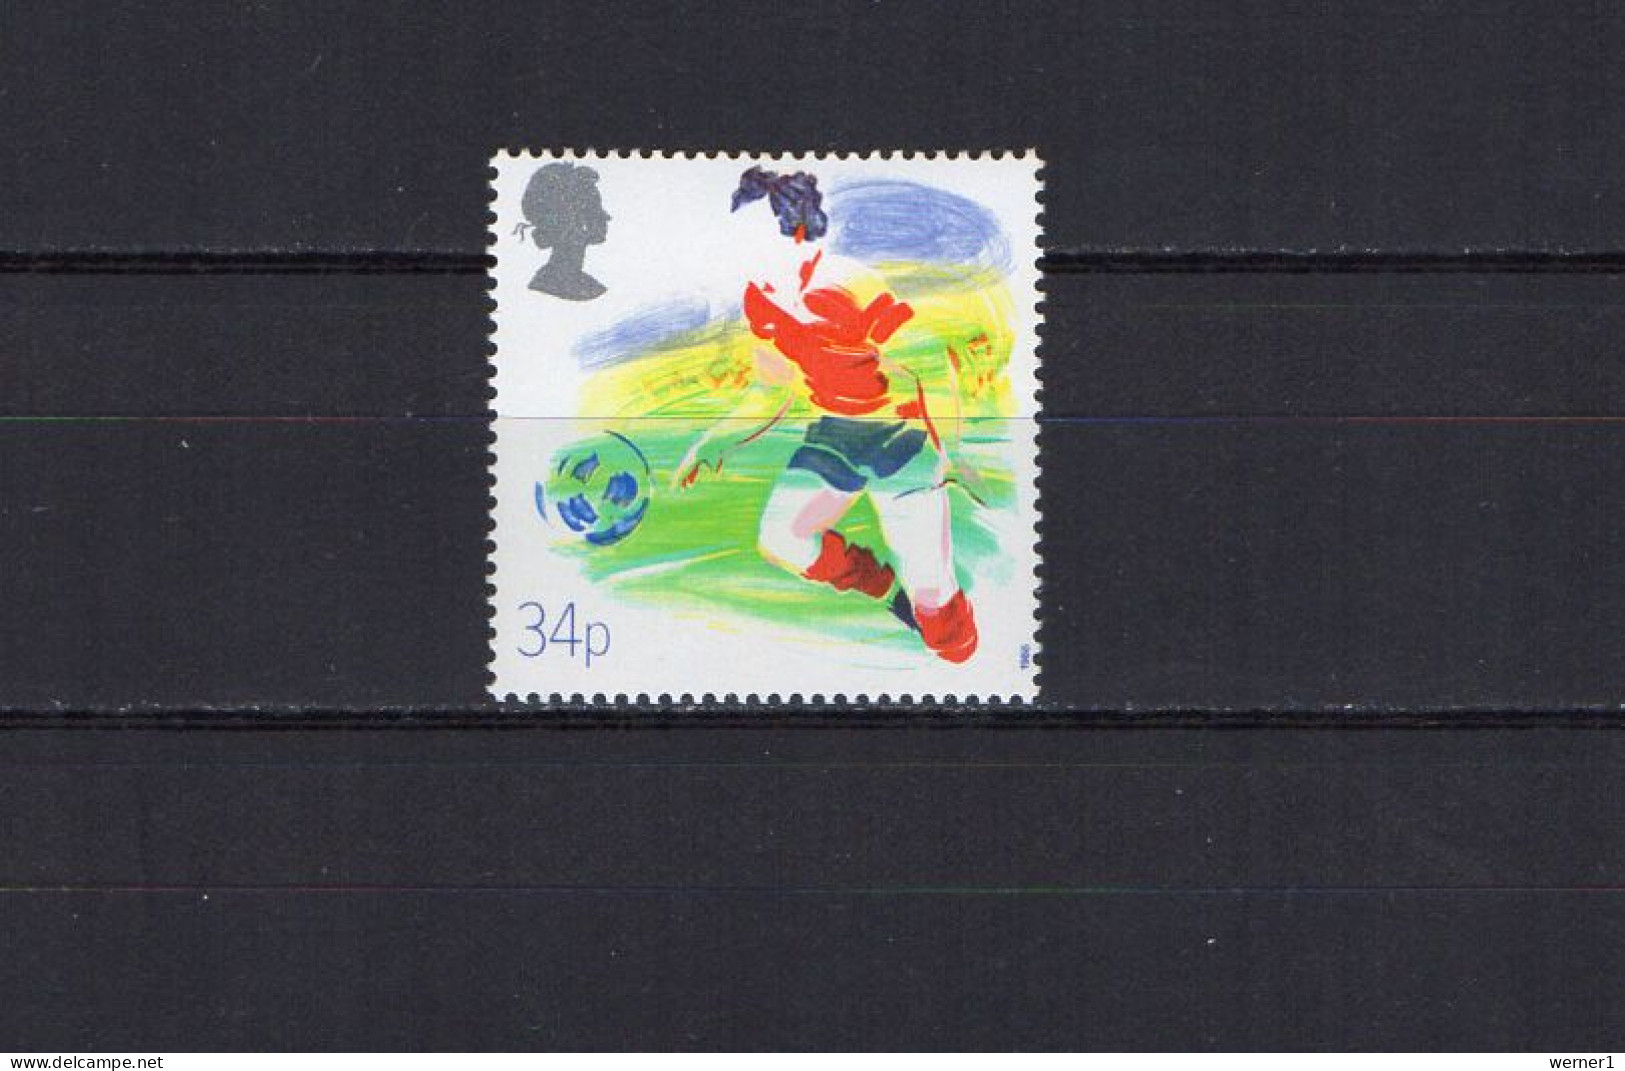 UK England, Great Britain 1988 Football Soccer Stamp MNH - Ongebruikt